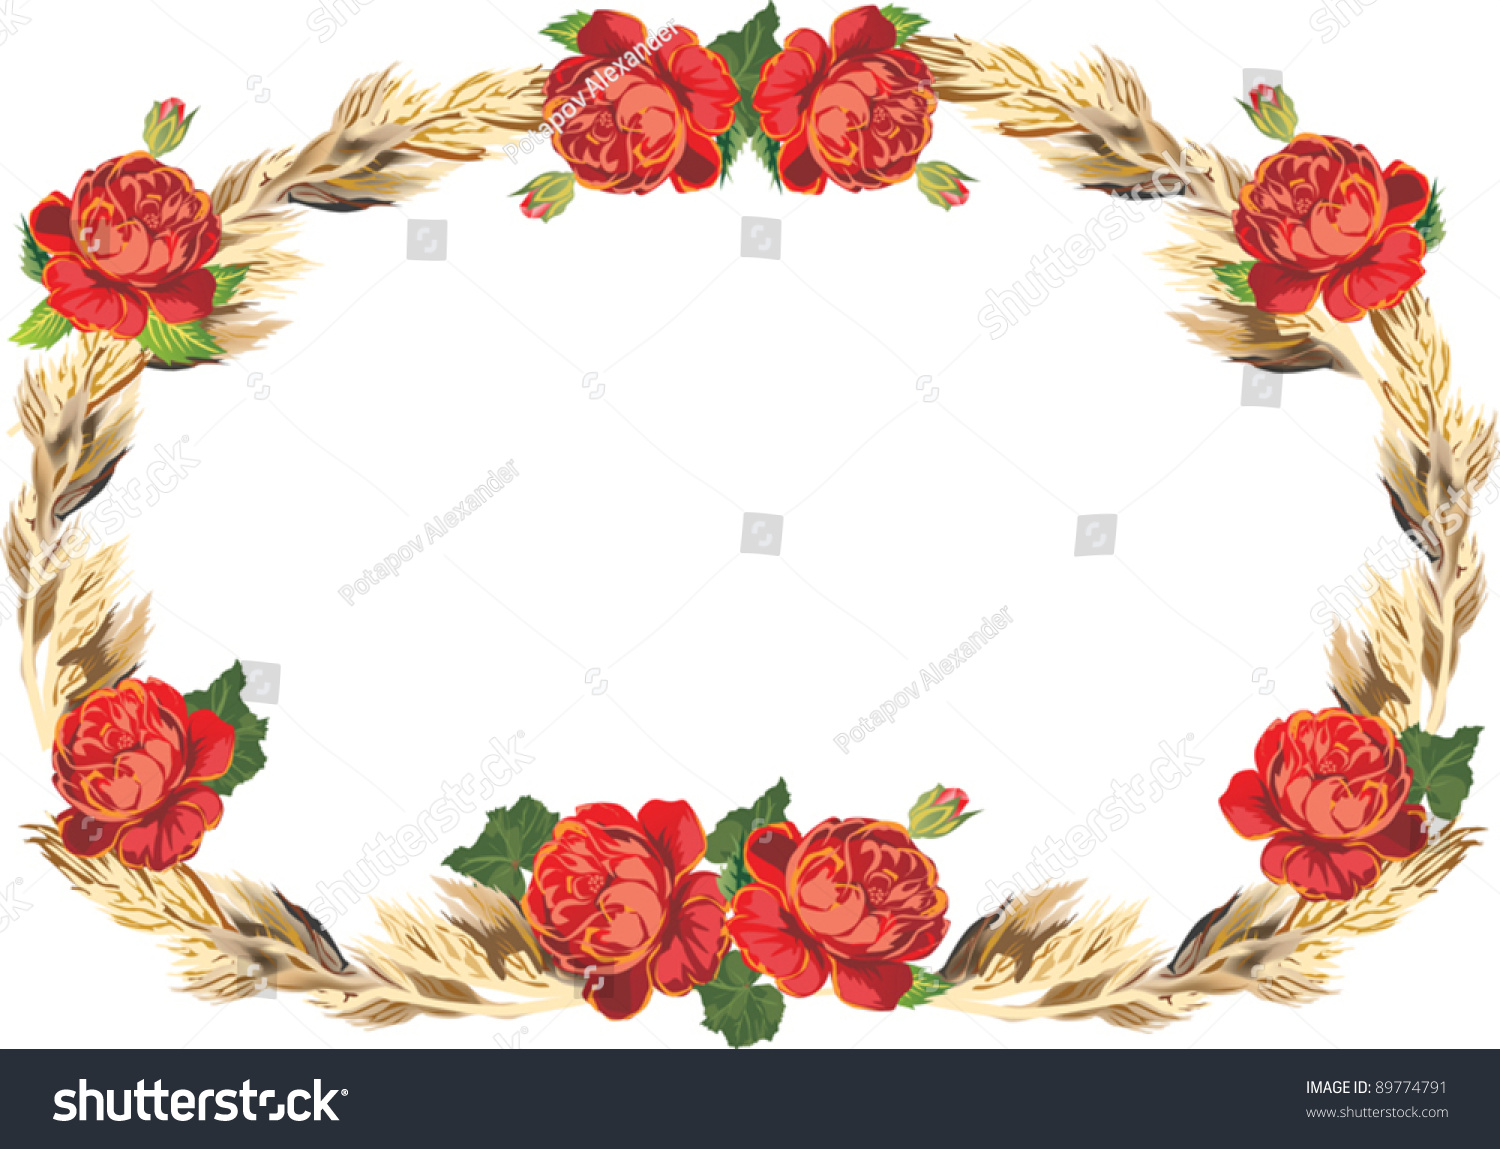 Illustration Red Rose Flowers Dry Grass Stock Vector 89774791